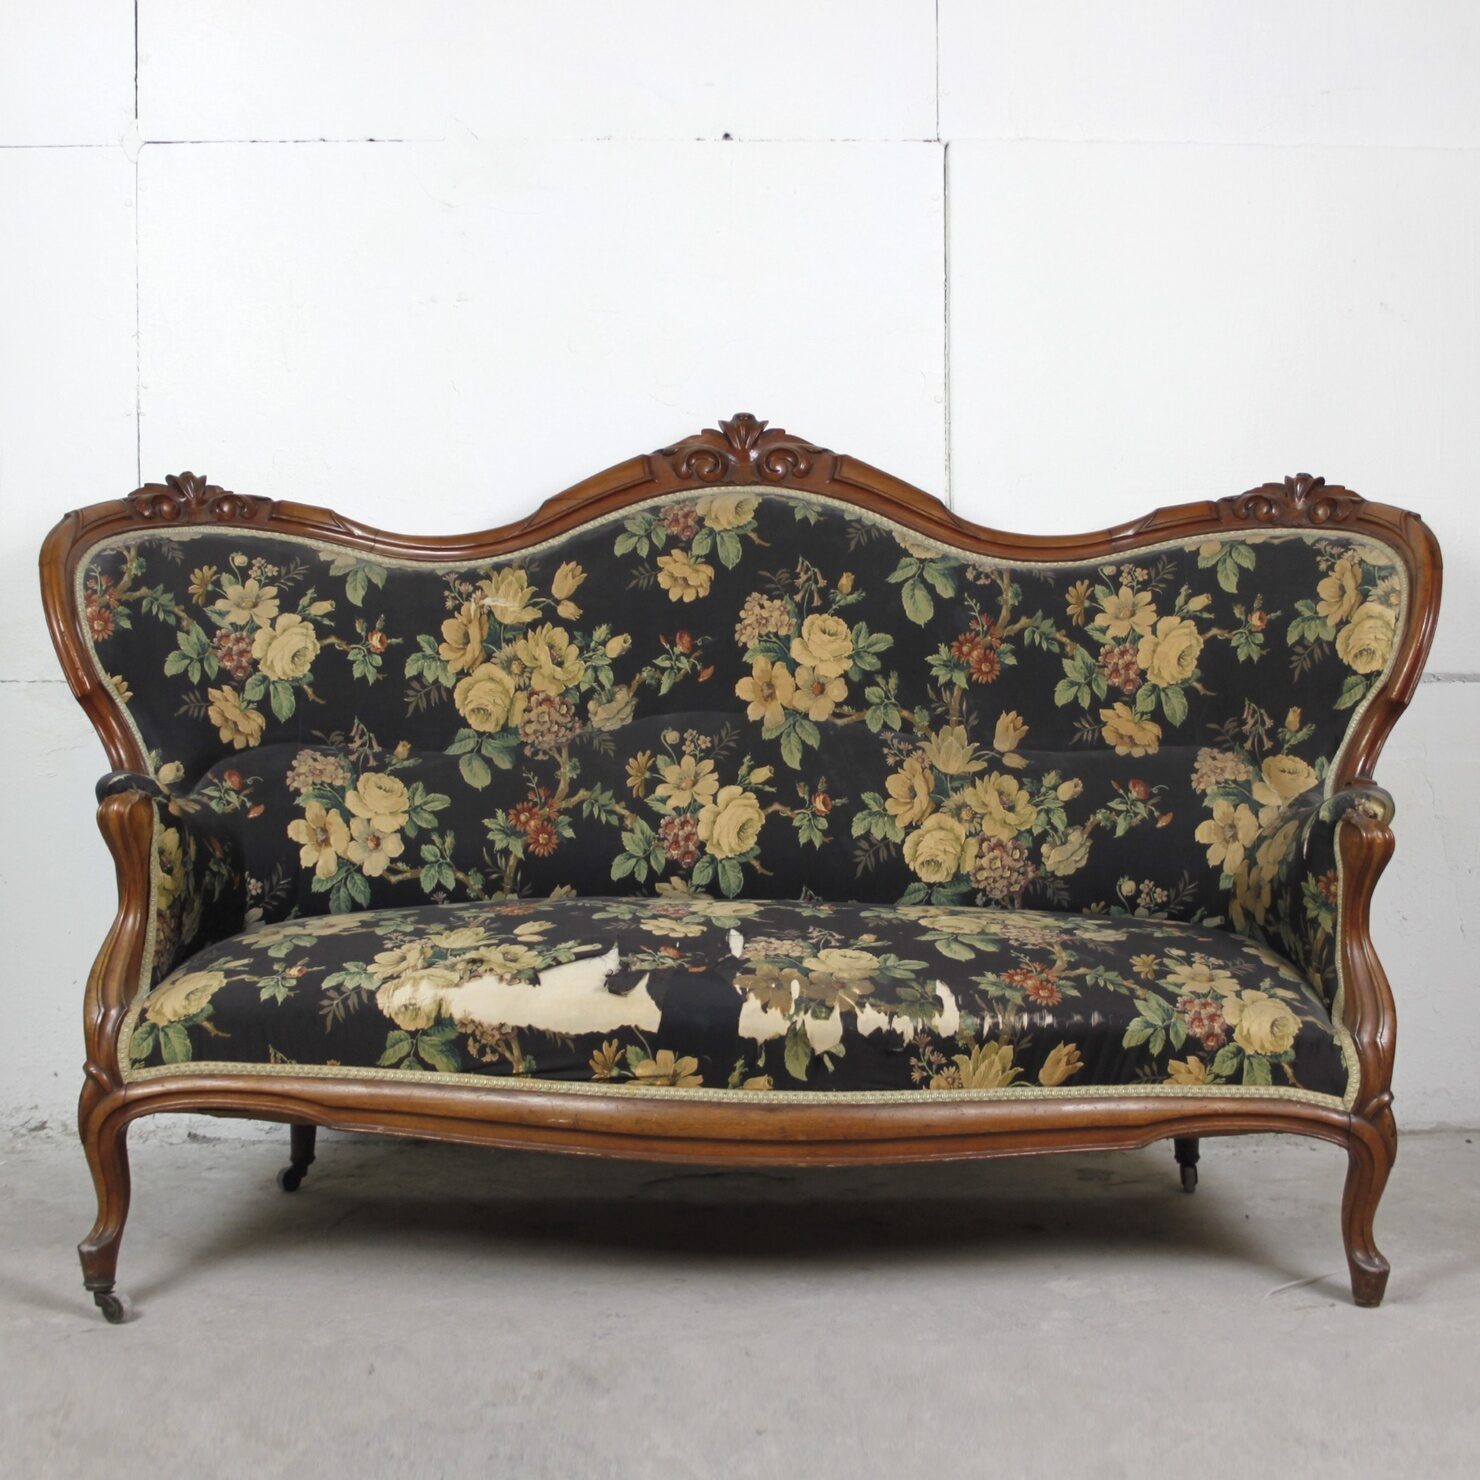 Антикварные диваны. Антикварный диван. Старинный диванчик. Софа старинная. Старинный антикварный диван.